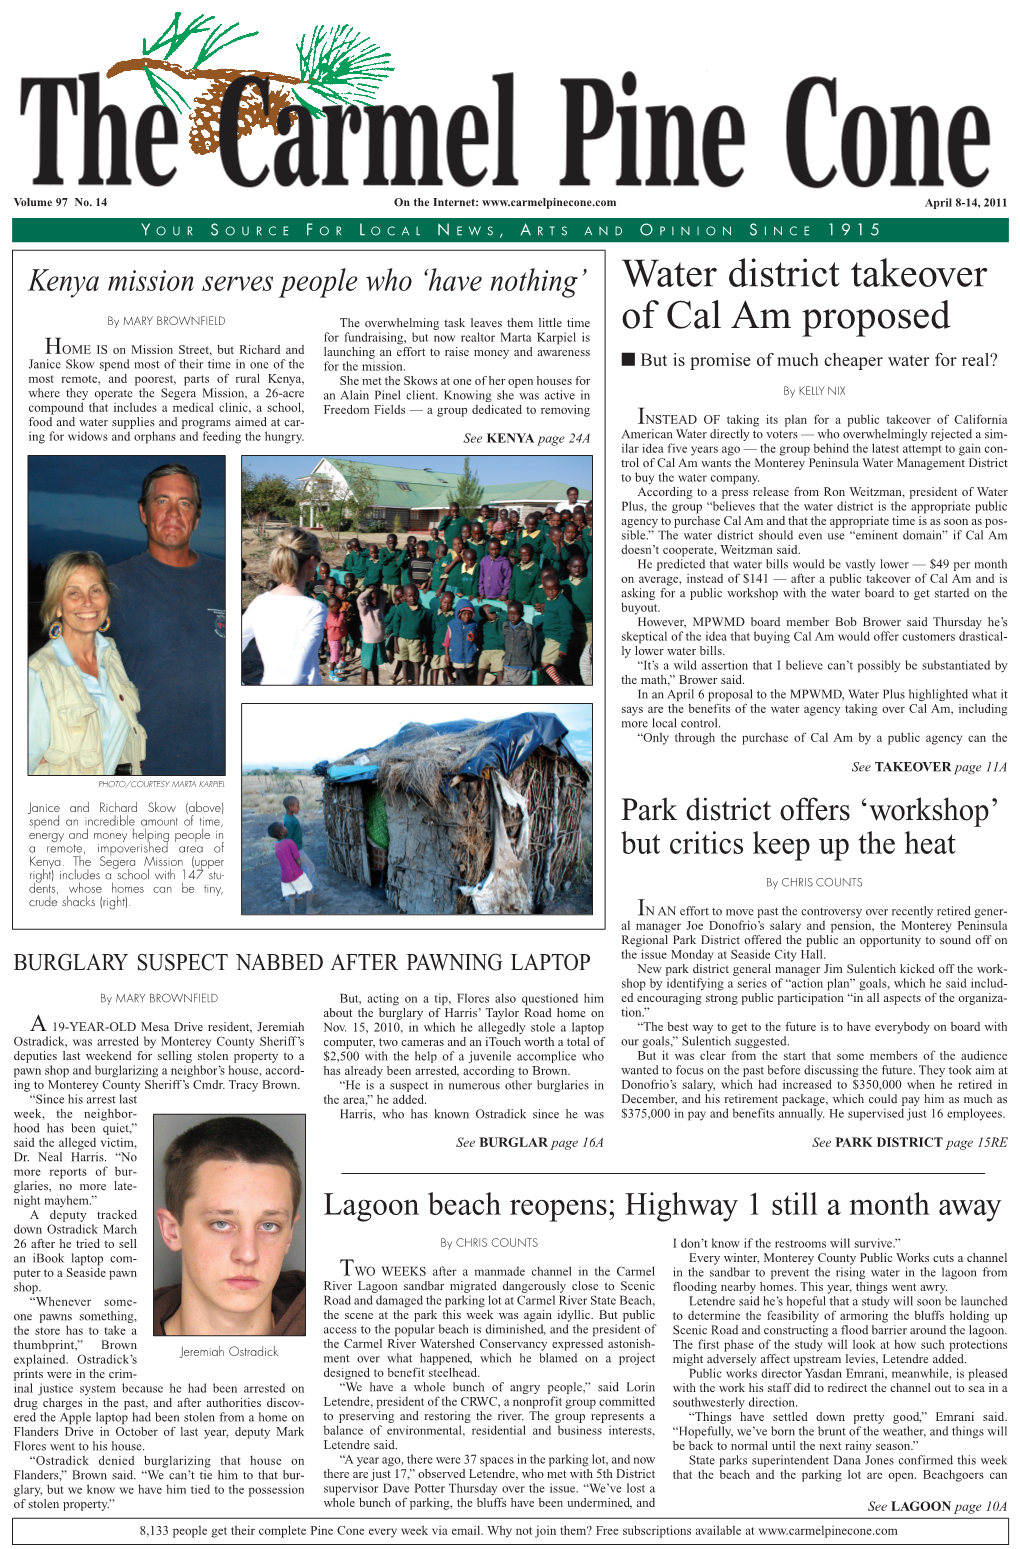 Carmel Pine Cone, April 8, 2011 (Main News)